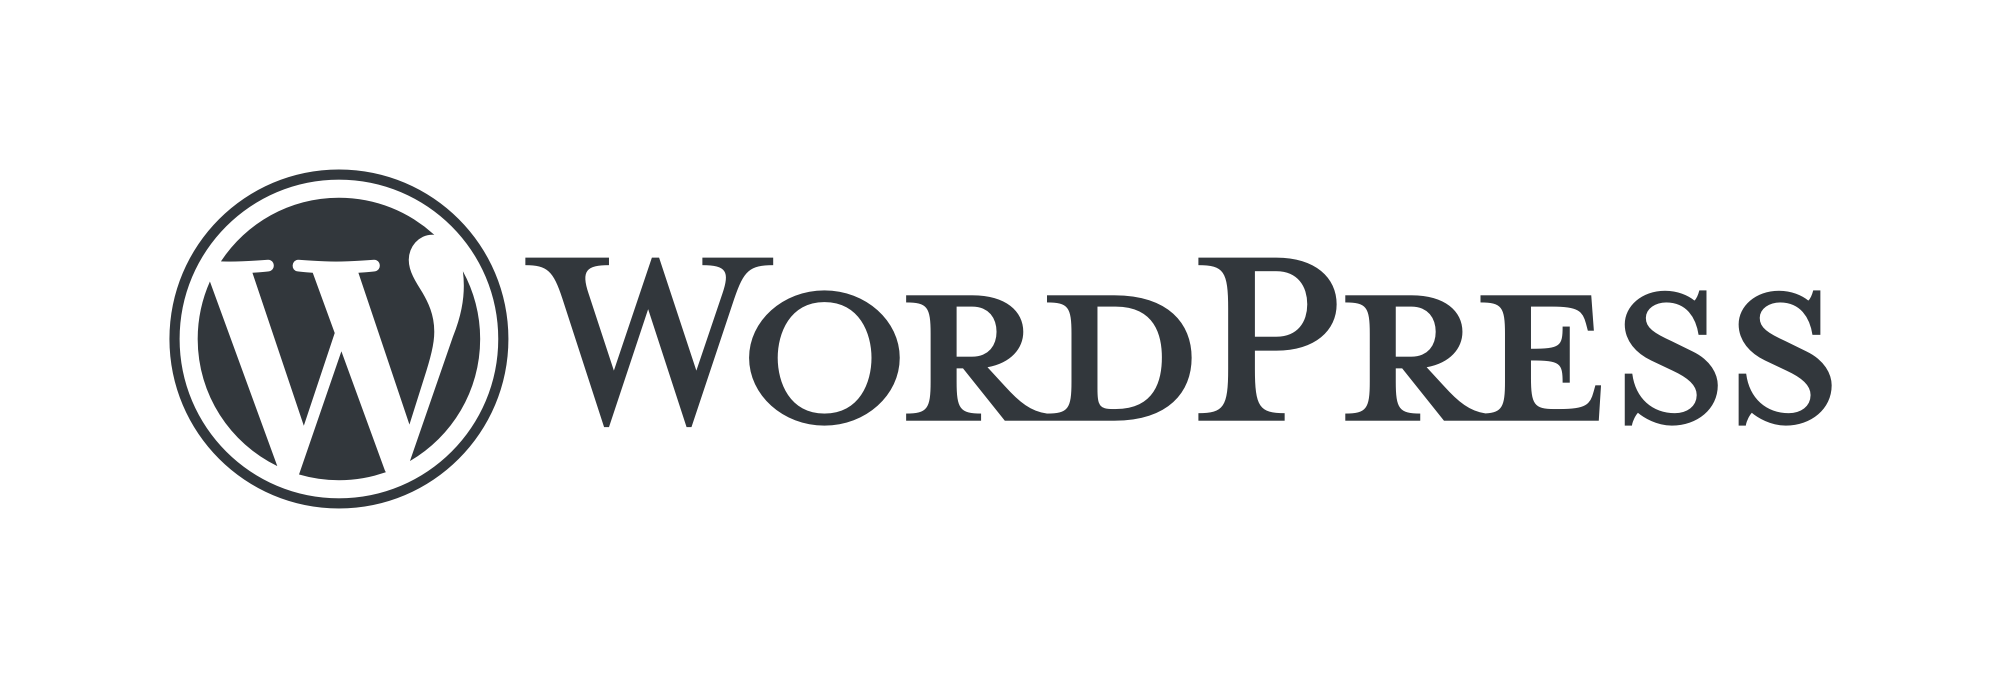 WordPress logo standard